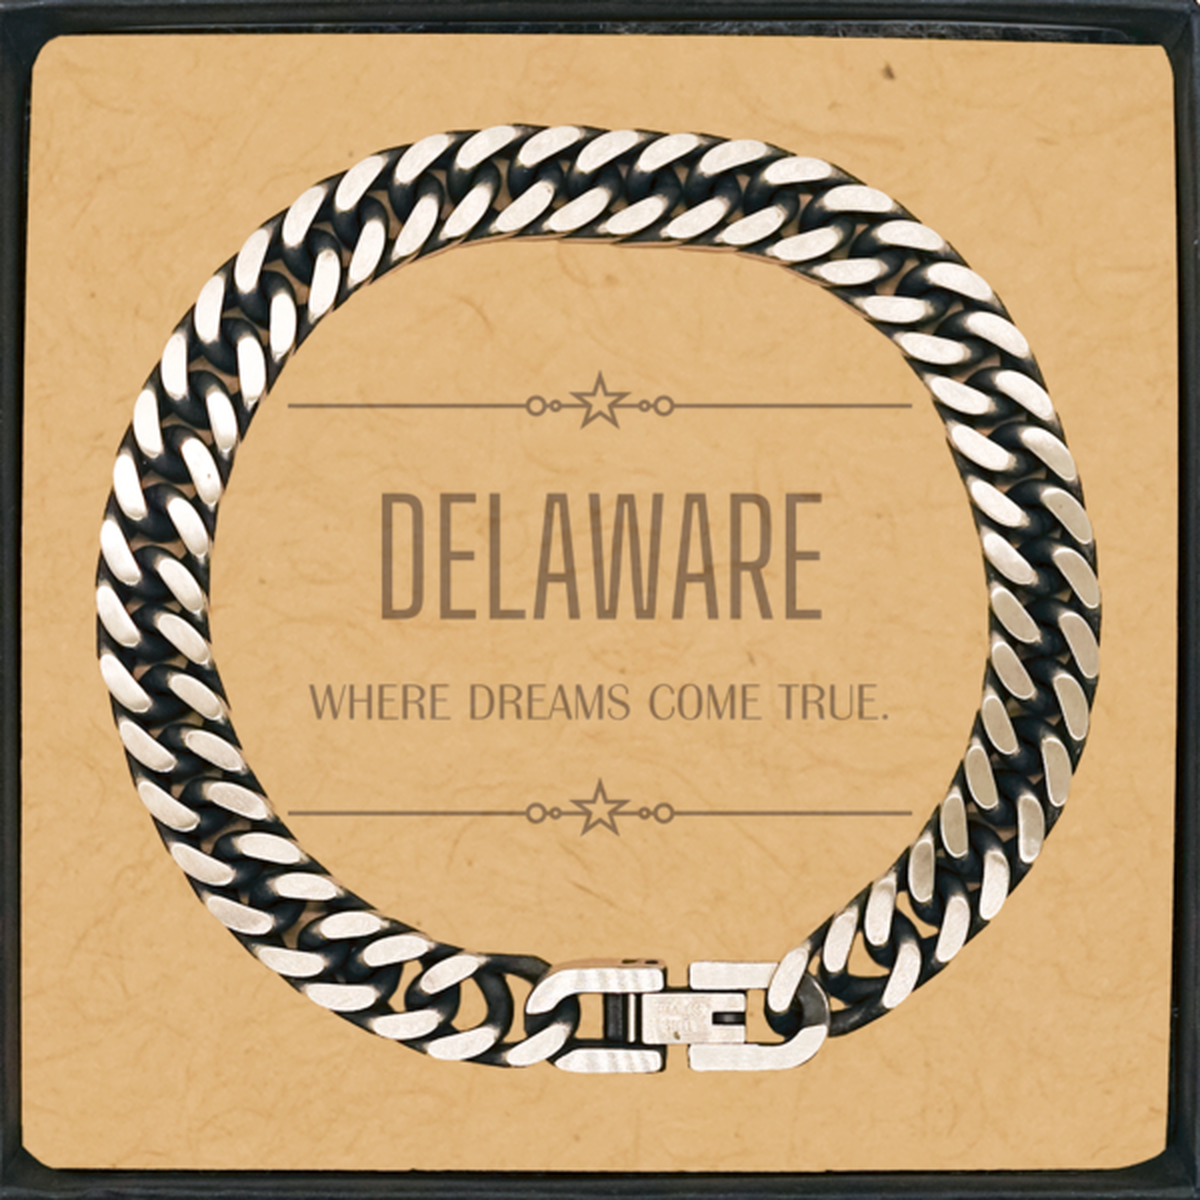 Love Delaware State Cuban Link Chain Bracelet, Delaware Where dreams come true, Birthday Inspirational Gifts For Delaware Men, Women, Friends